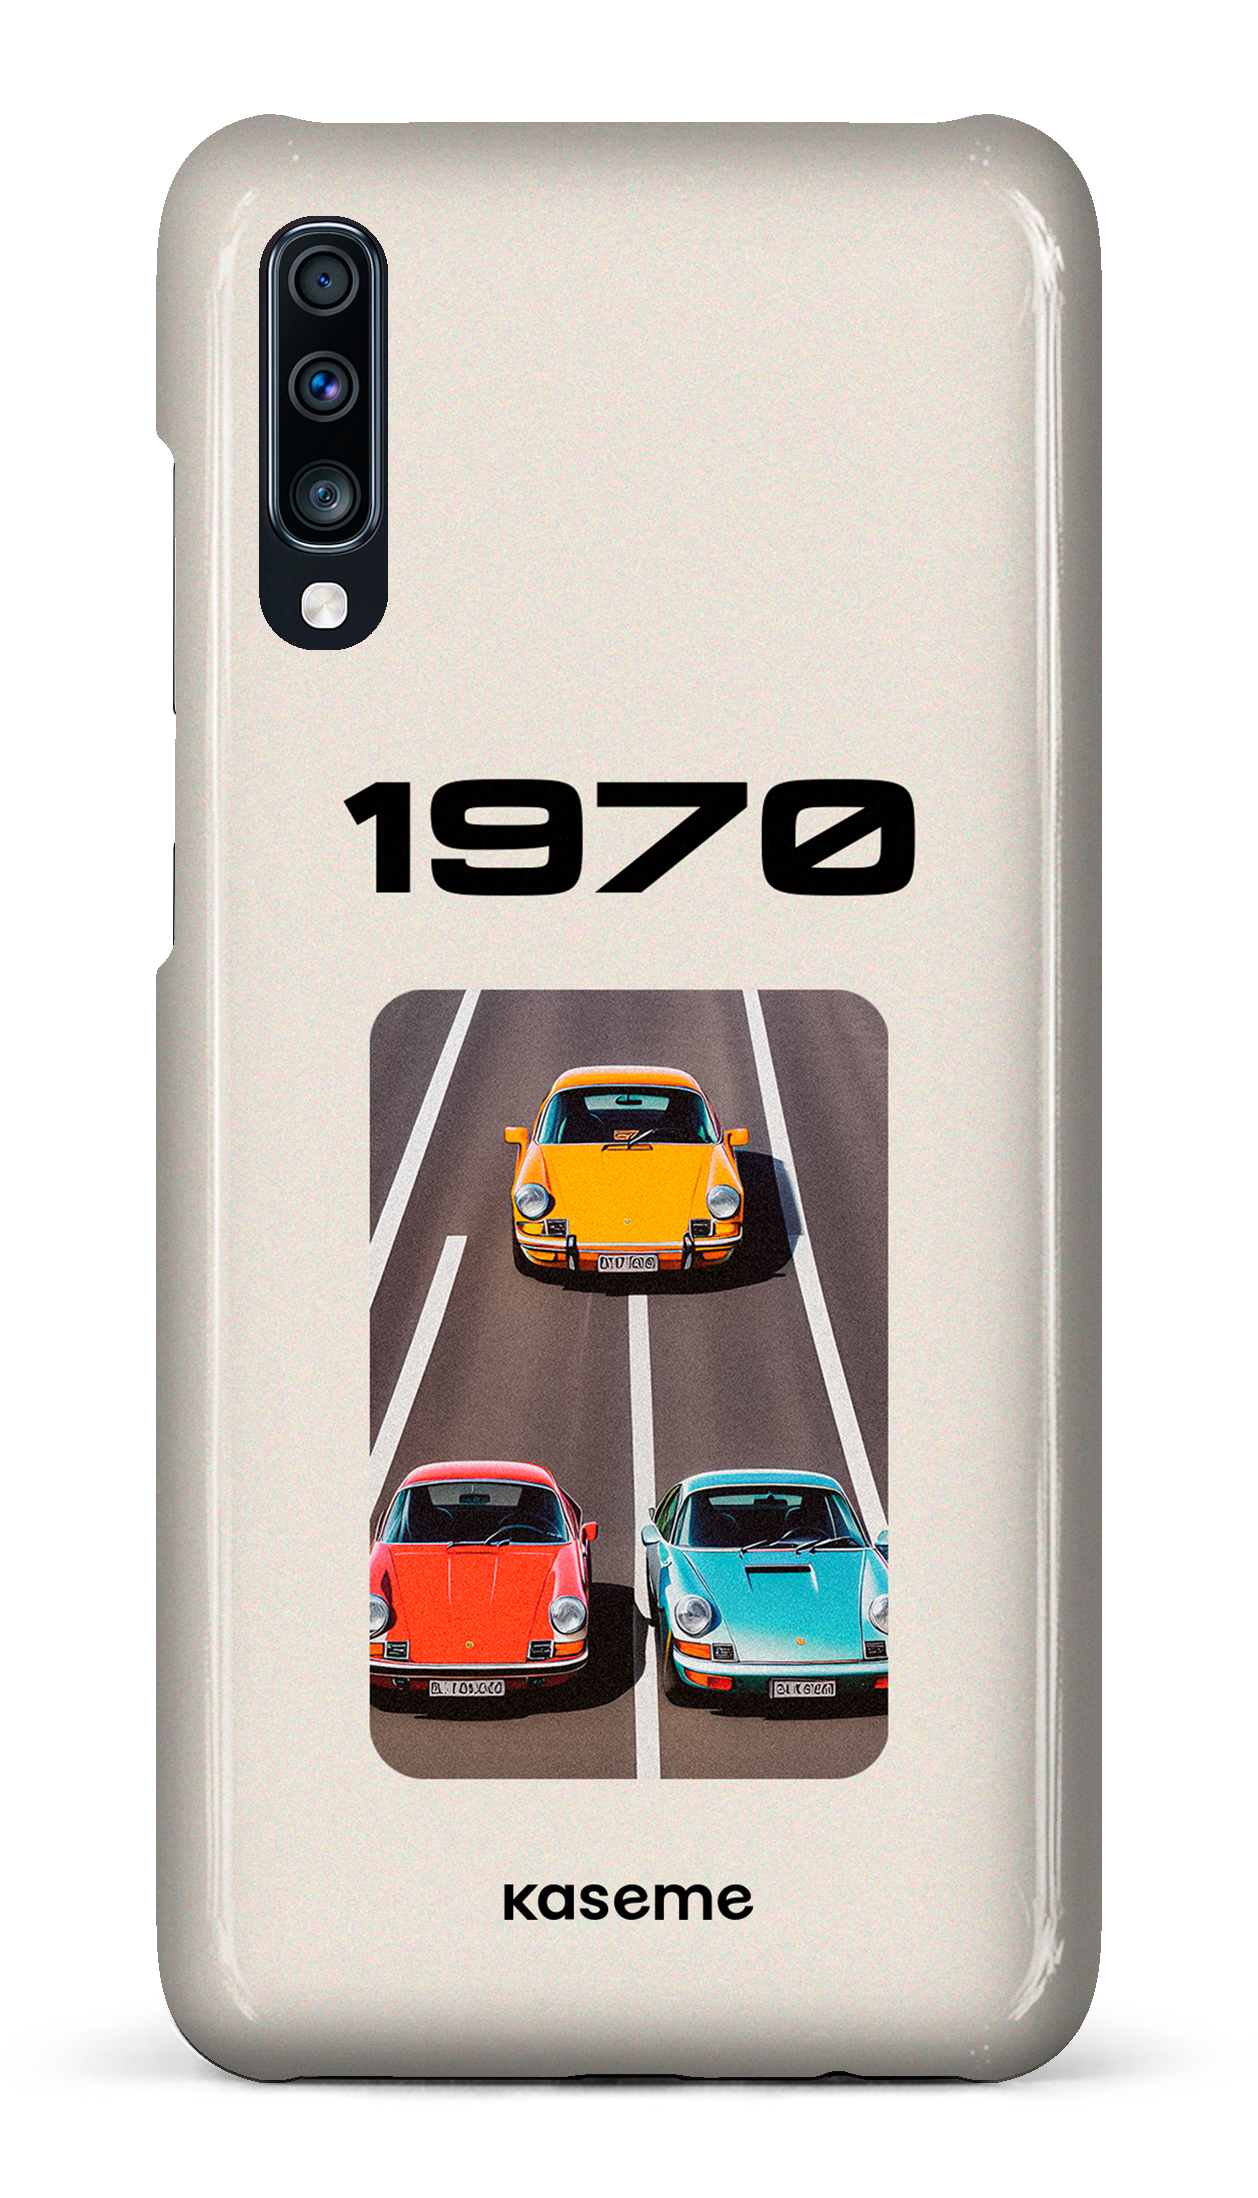 The 1970 - Galaxy A70